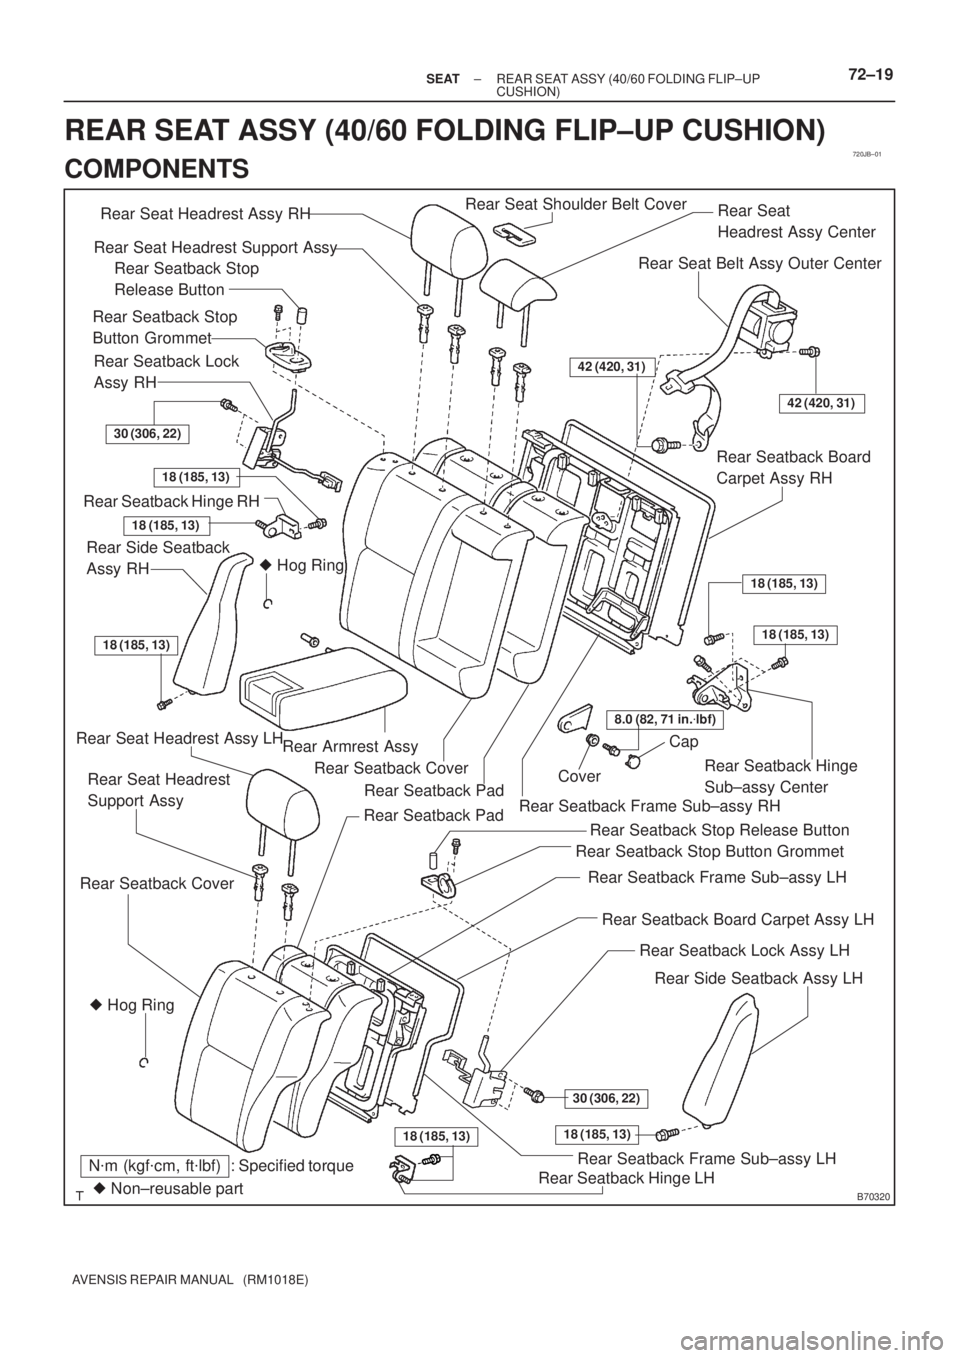 TOYOTA AVENSIS 2005  Service Repair Manual 720JB±01
B70320
Rear Seat Headrest Assy RHRear Seat 
Headrest Assy Center
 Hog Ring
Nm (kgfcm, ftlbf) : Specified torque
 Non±reusable part Rear Seat Headrest Support Assy
 Hog Ring
Rear Seat 